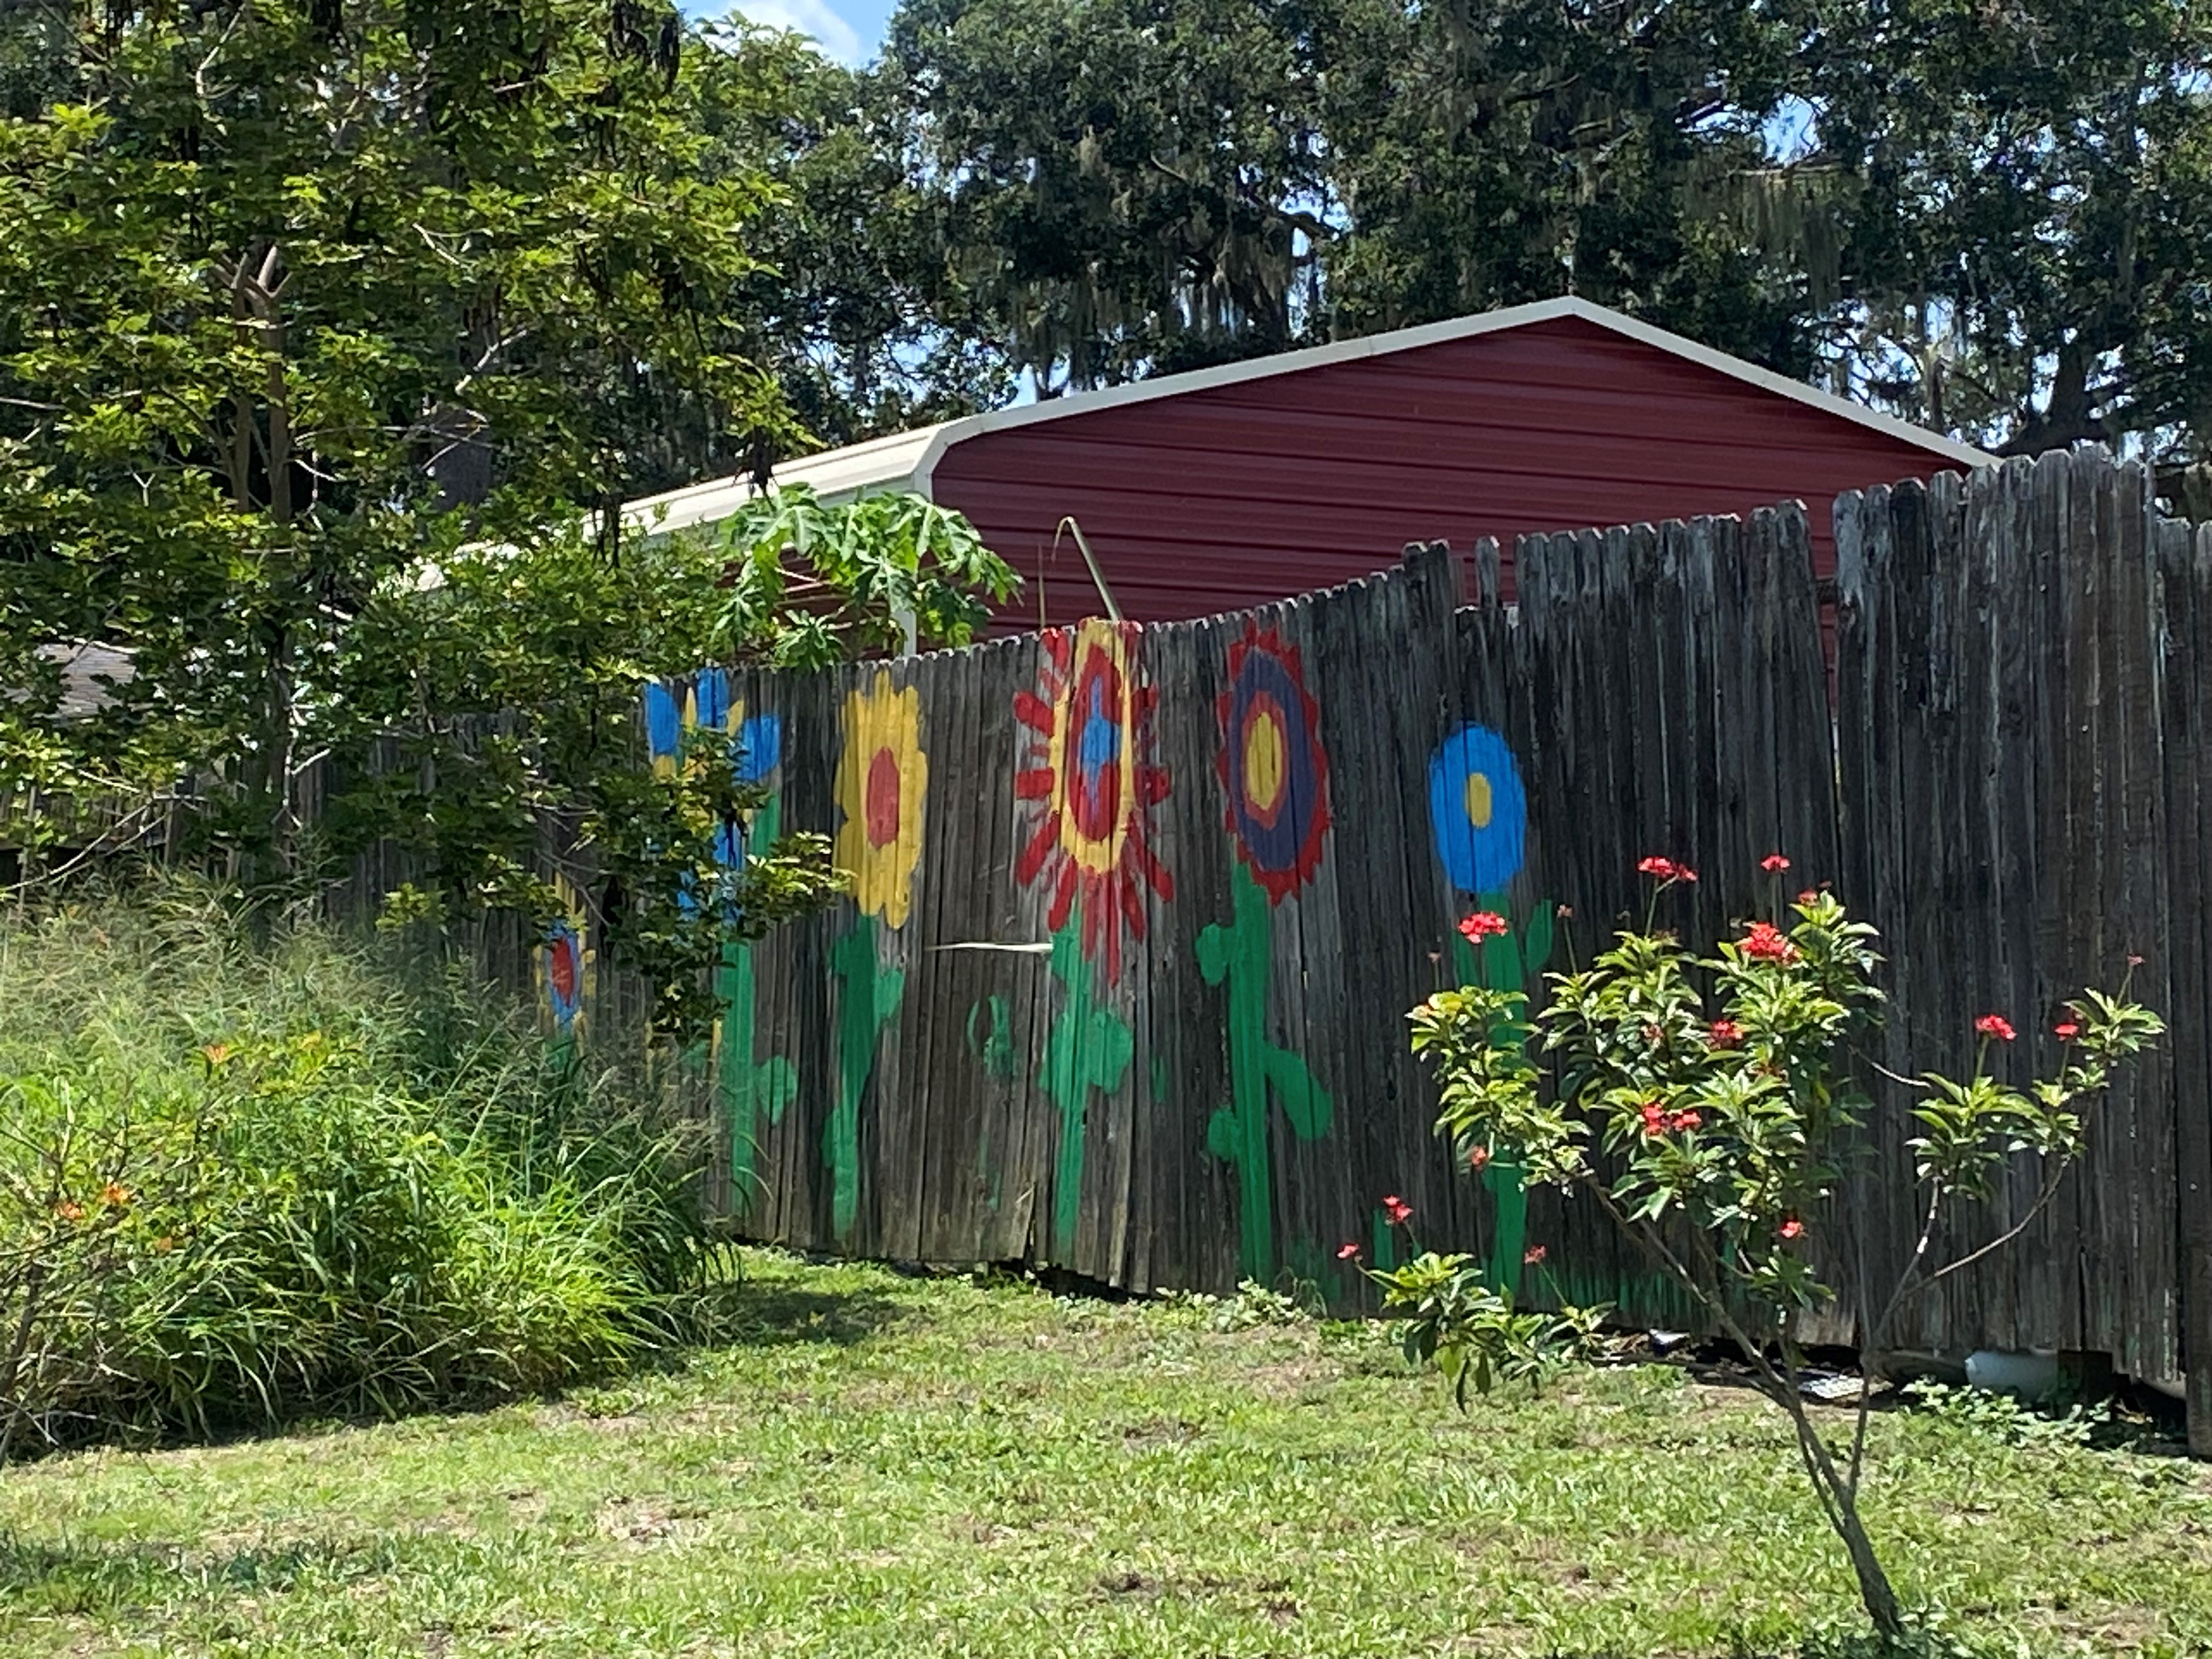 Some art in the Lakeshore Neighborhood.